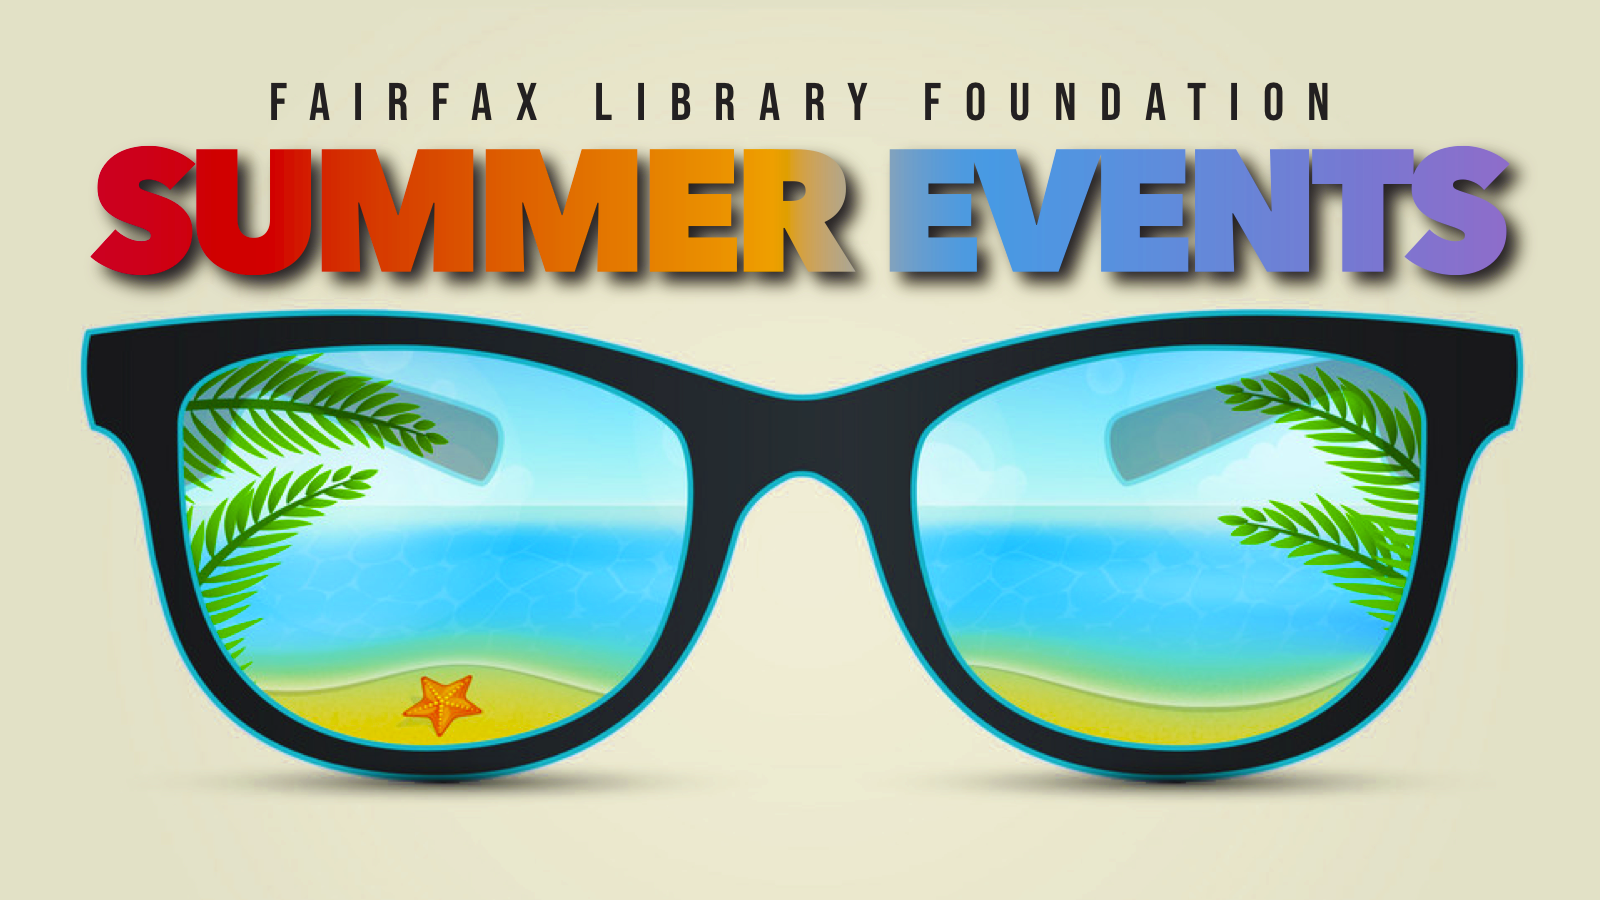 Fairfax Library Foundation Summer Events